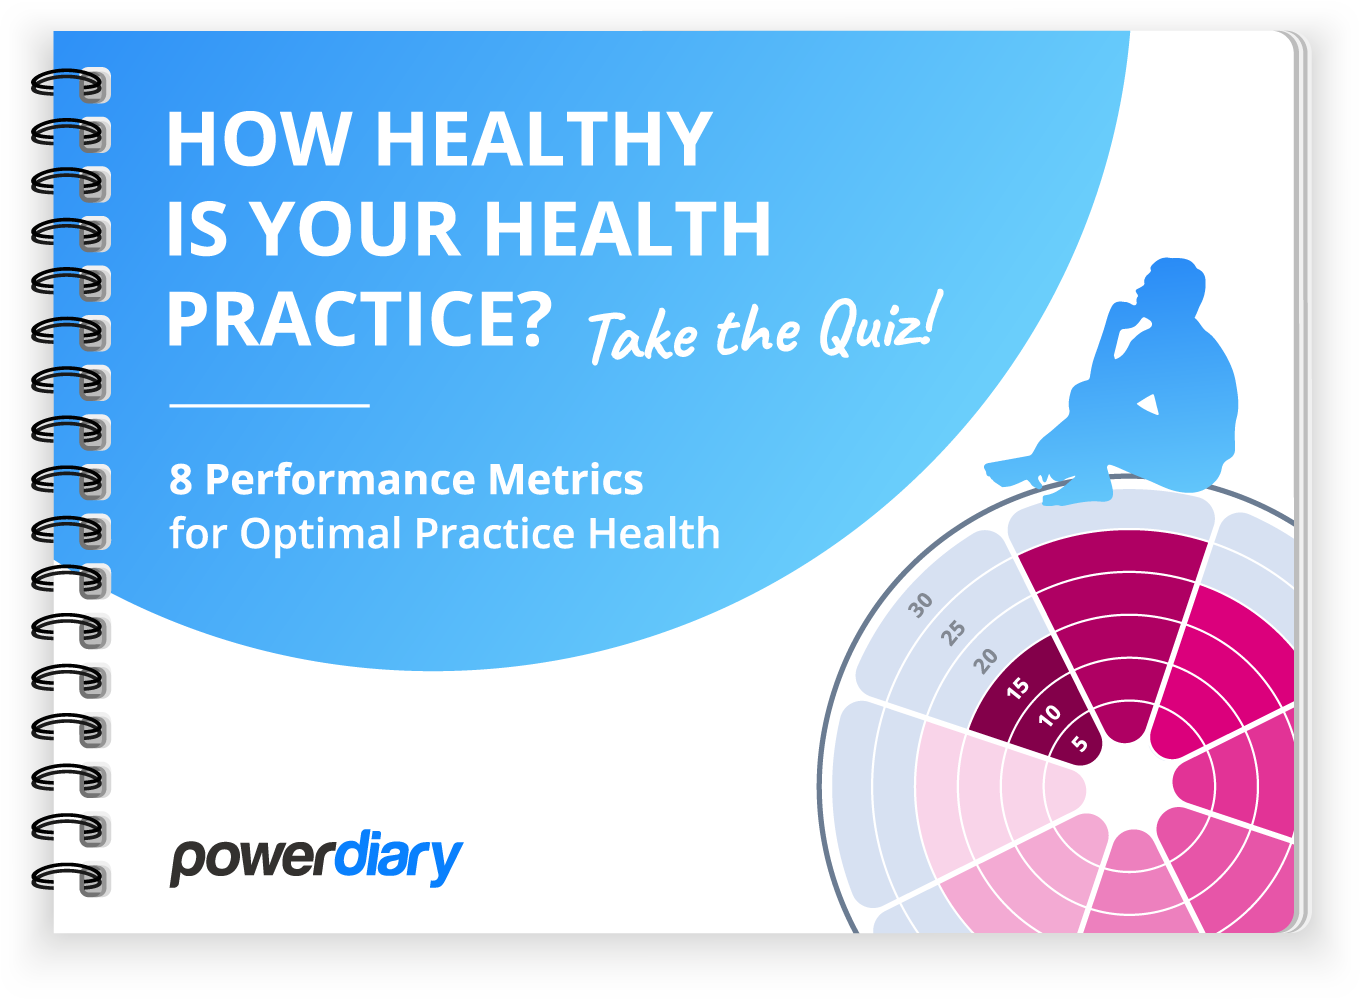 is Your Health Practice?